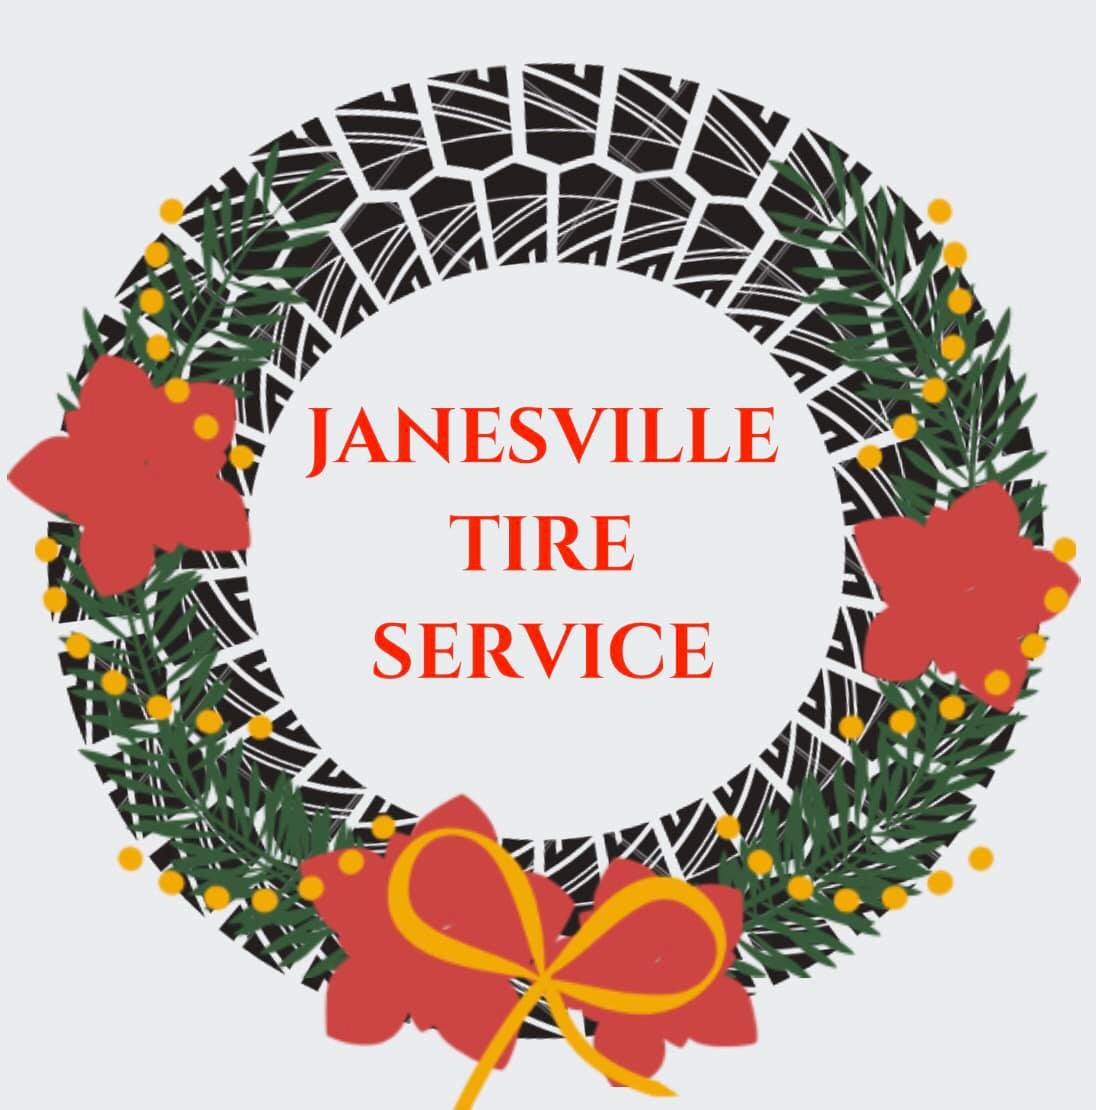 Janesville Tire Service